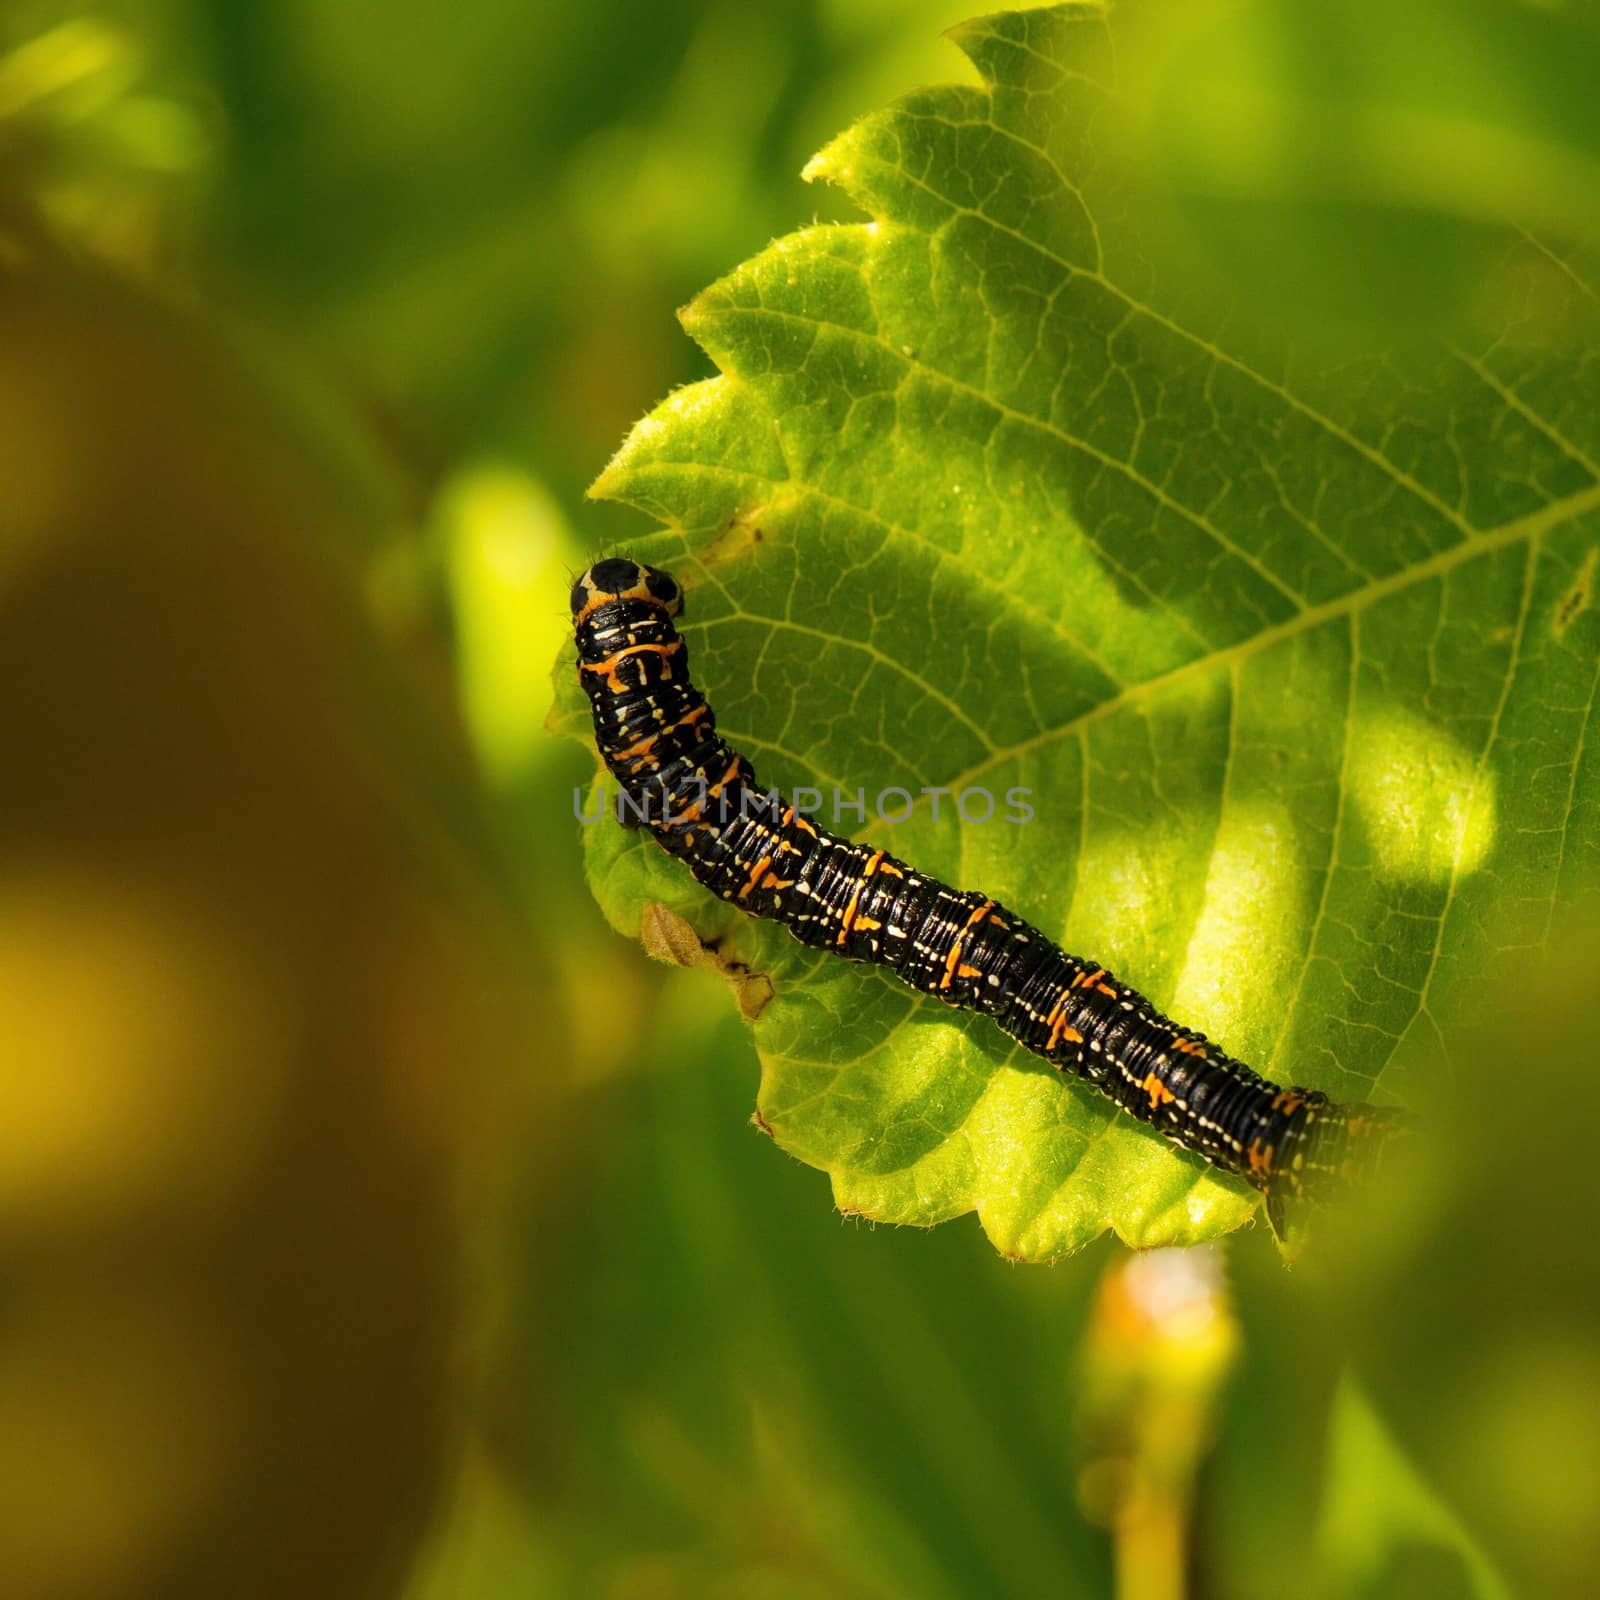 Black and orange caterpillar feeding on a lush green leaf. by blueandrew8000@hotmail.com